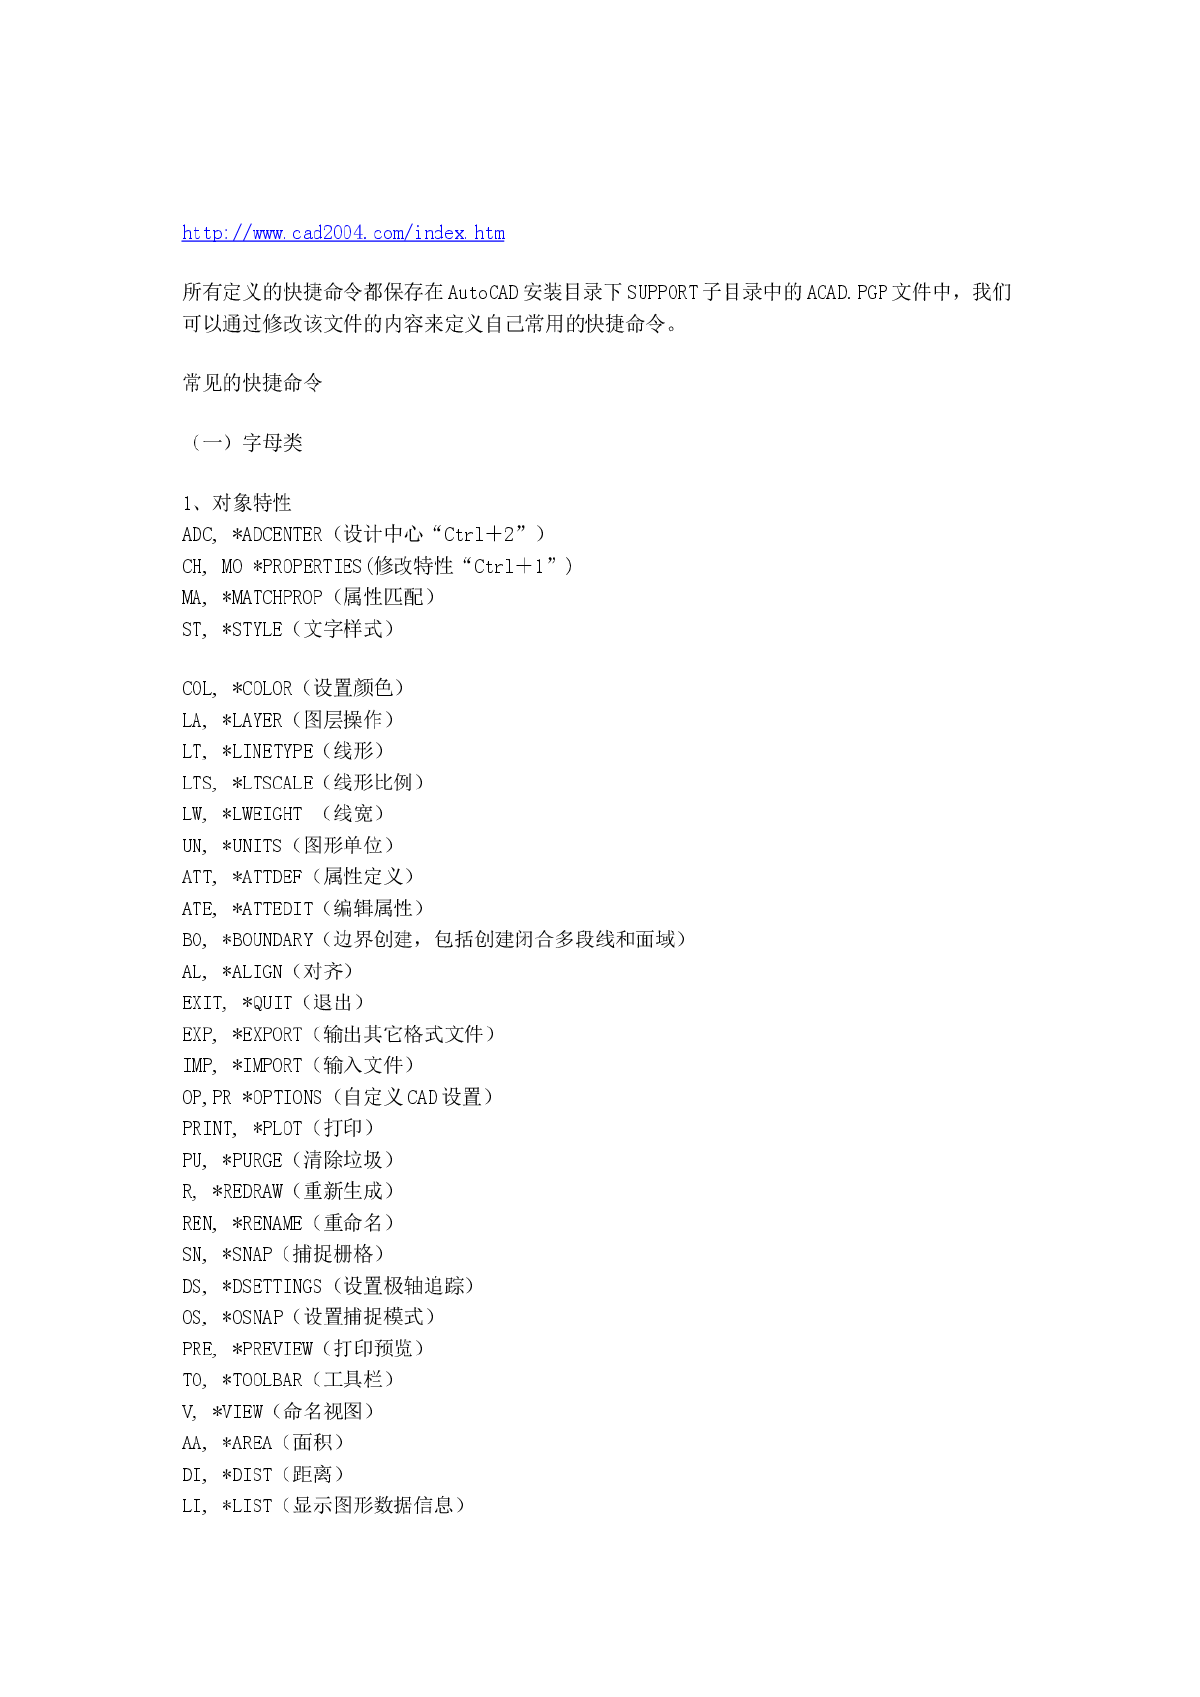 AutoCAD2004命令别名快捷键大全